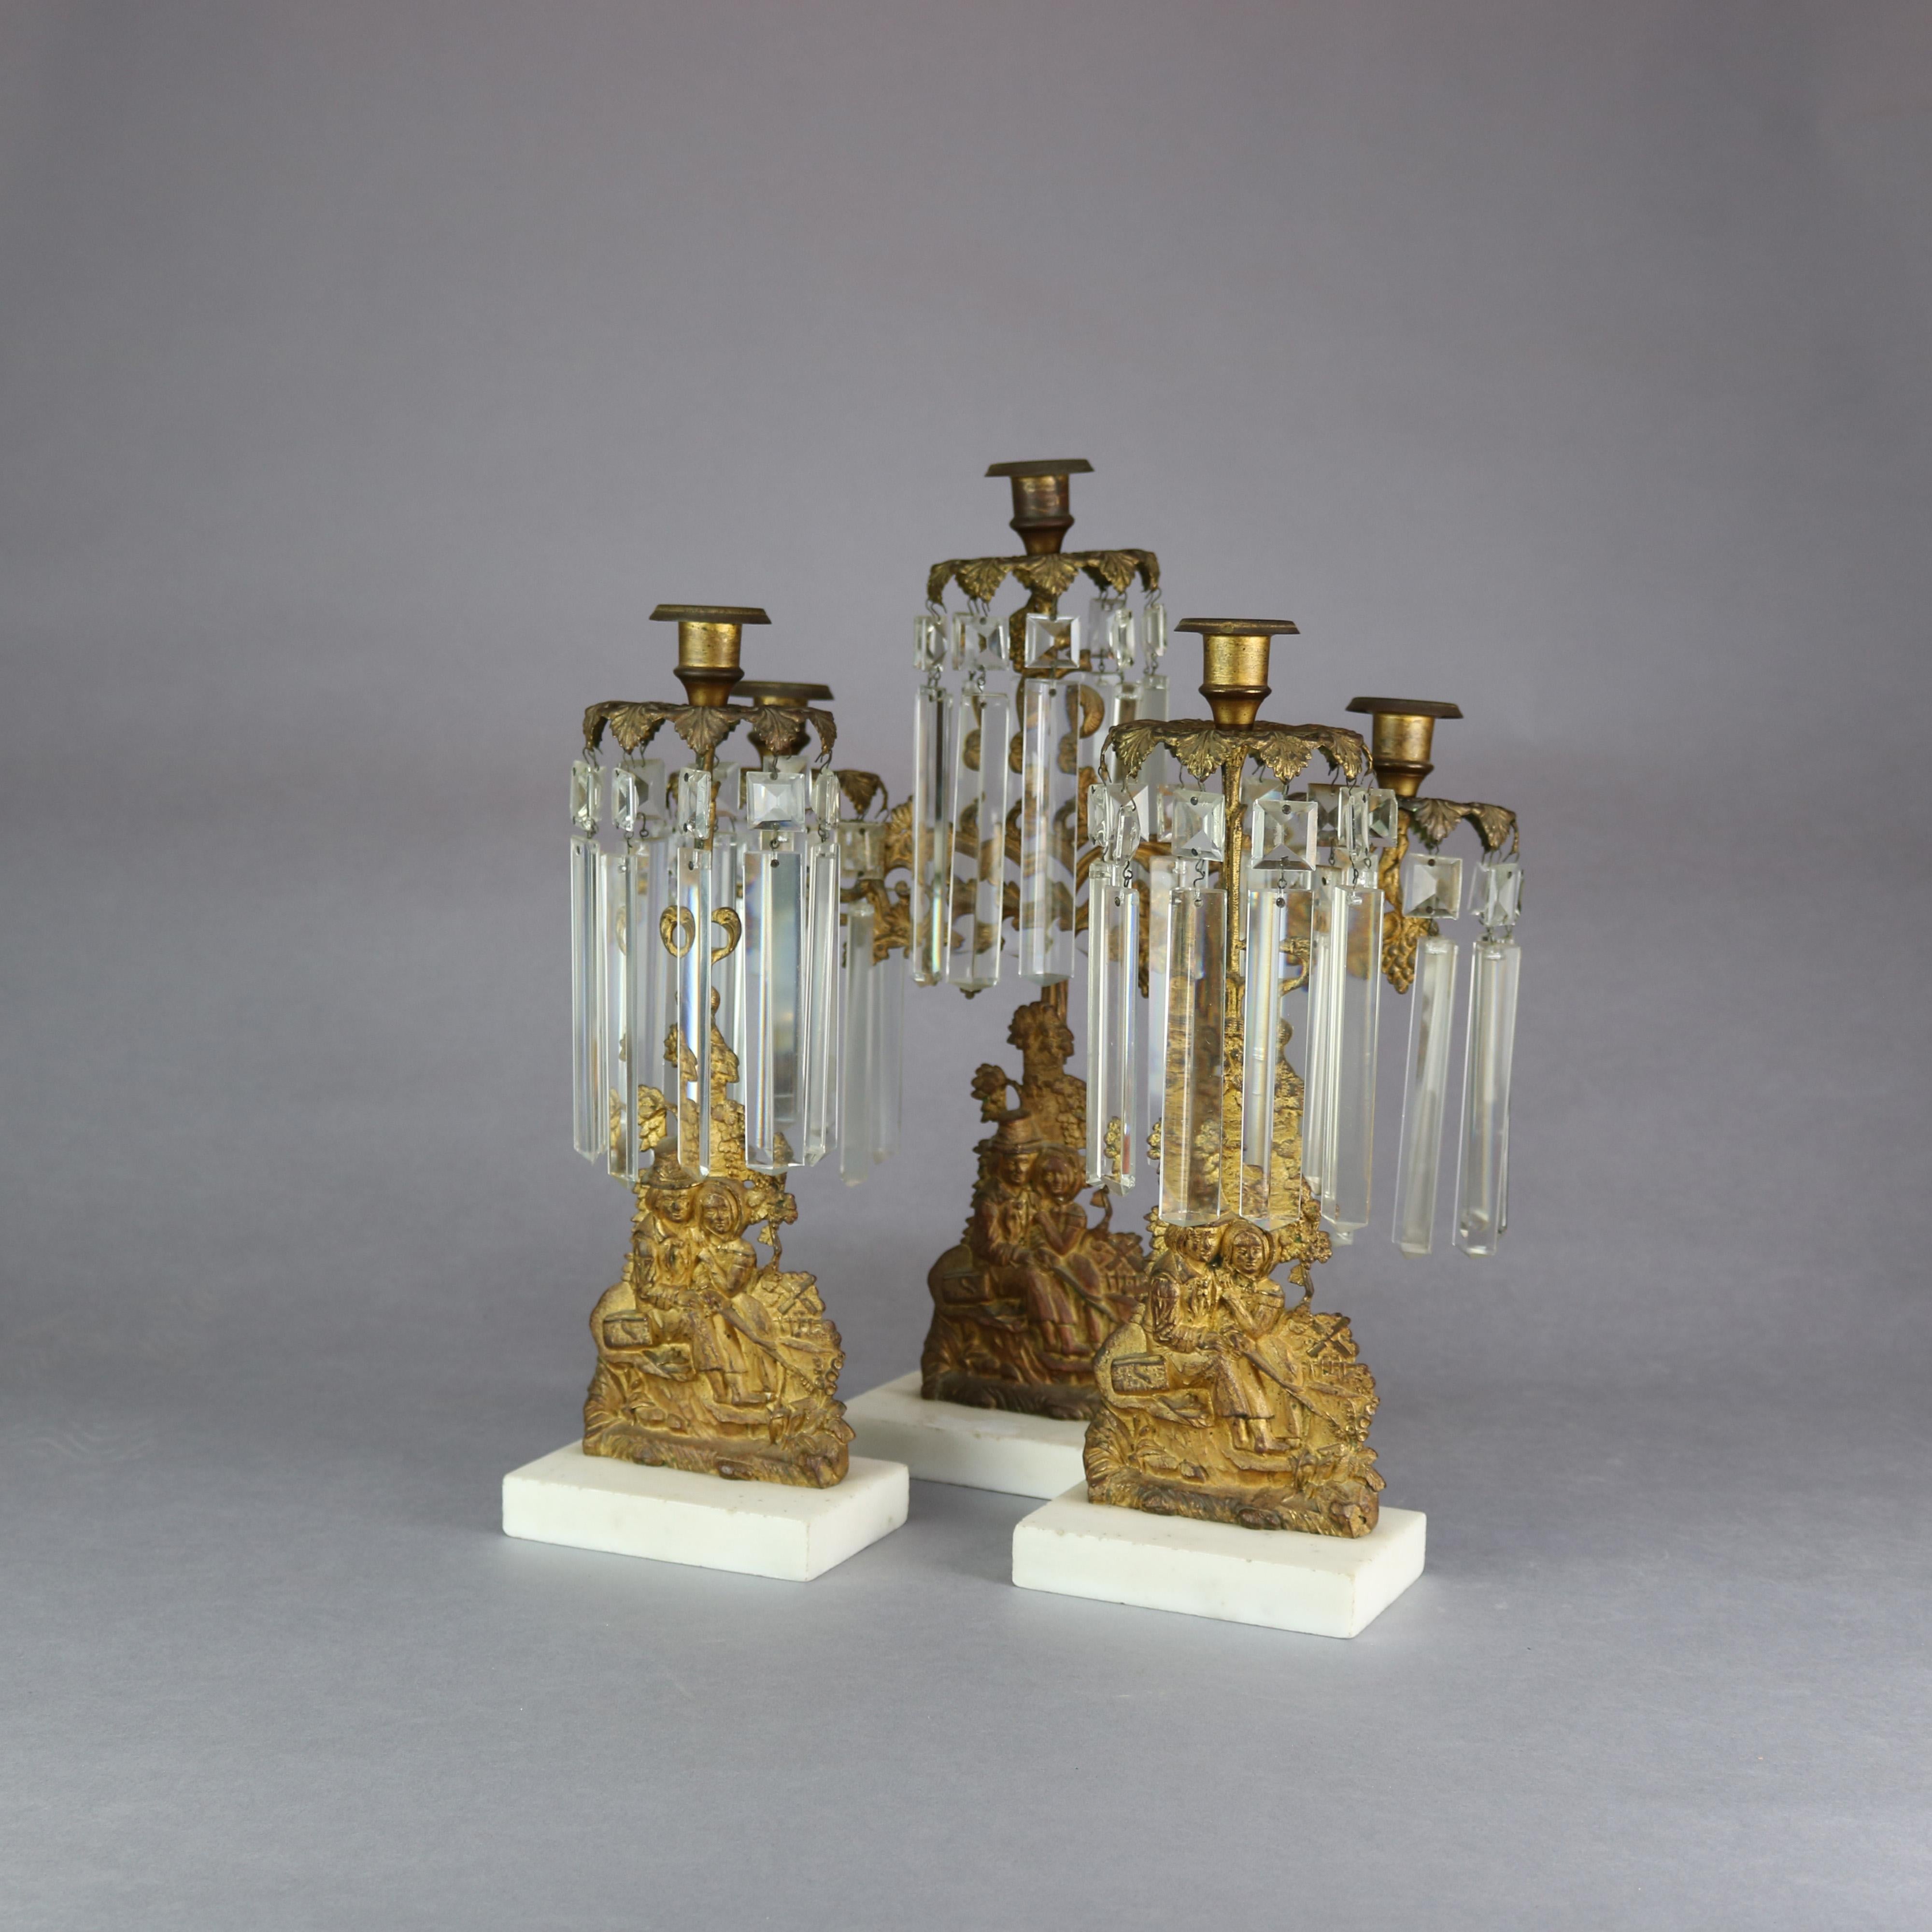 Antique American Figural Brass & Marble Mantel Girandolles Set, c1860 For Sale 5